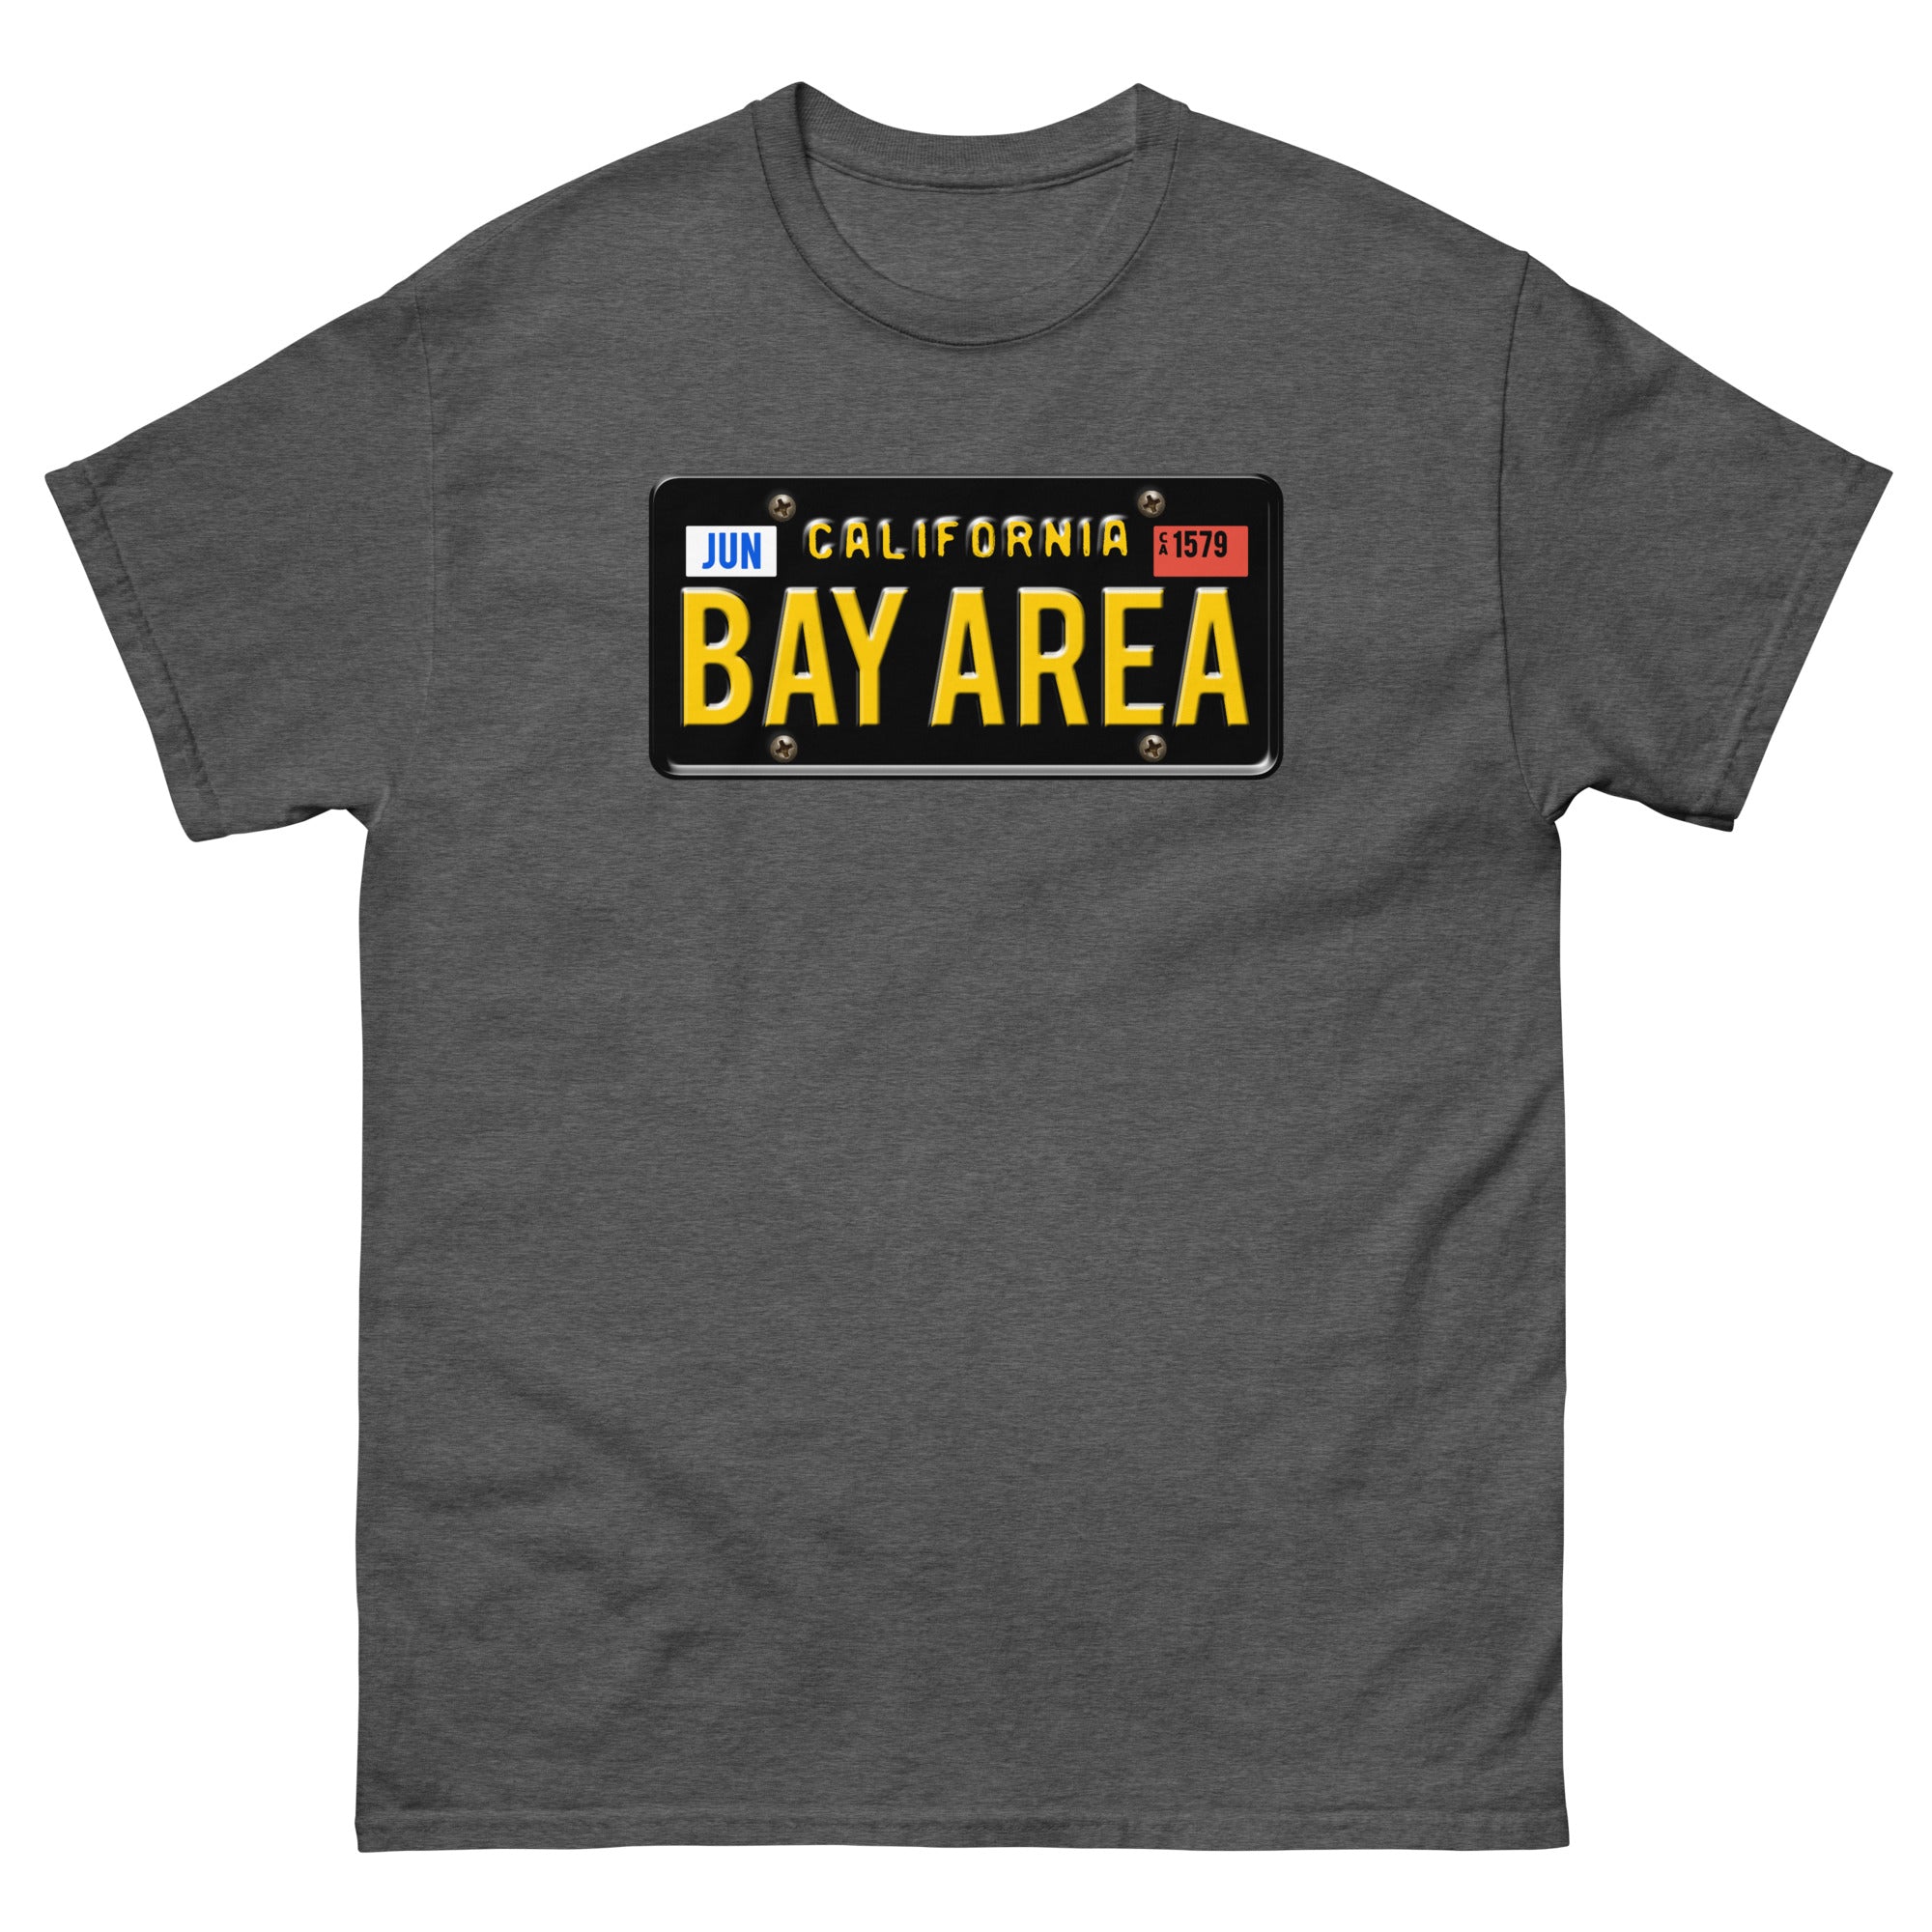 BAY AREA 1579 - Men's T-Shirt